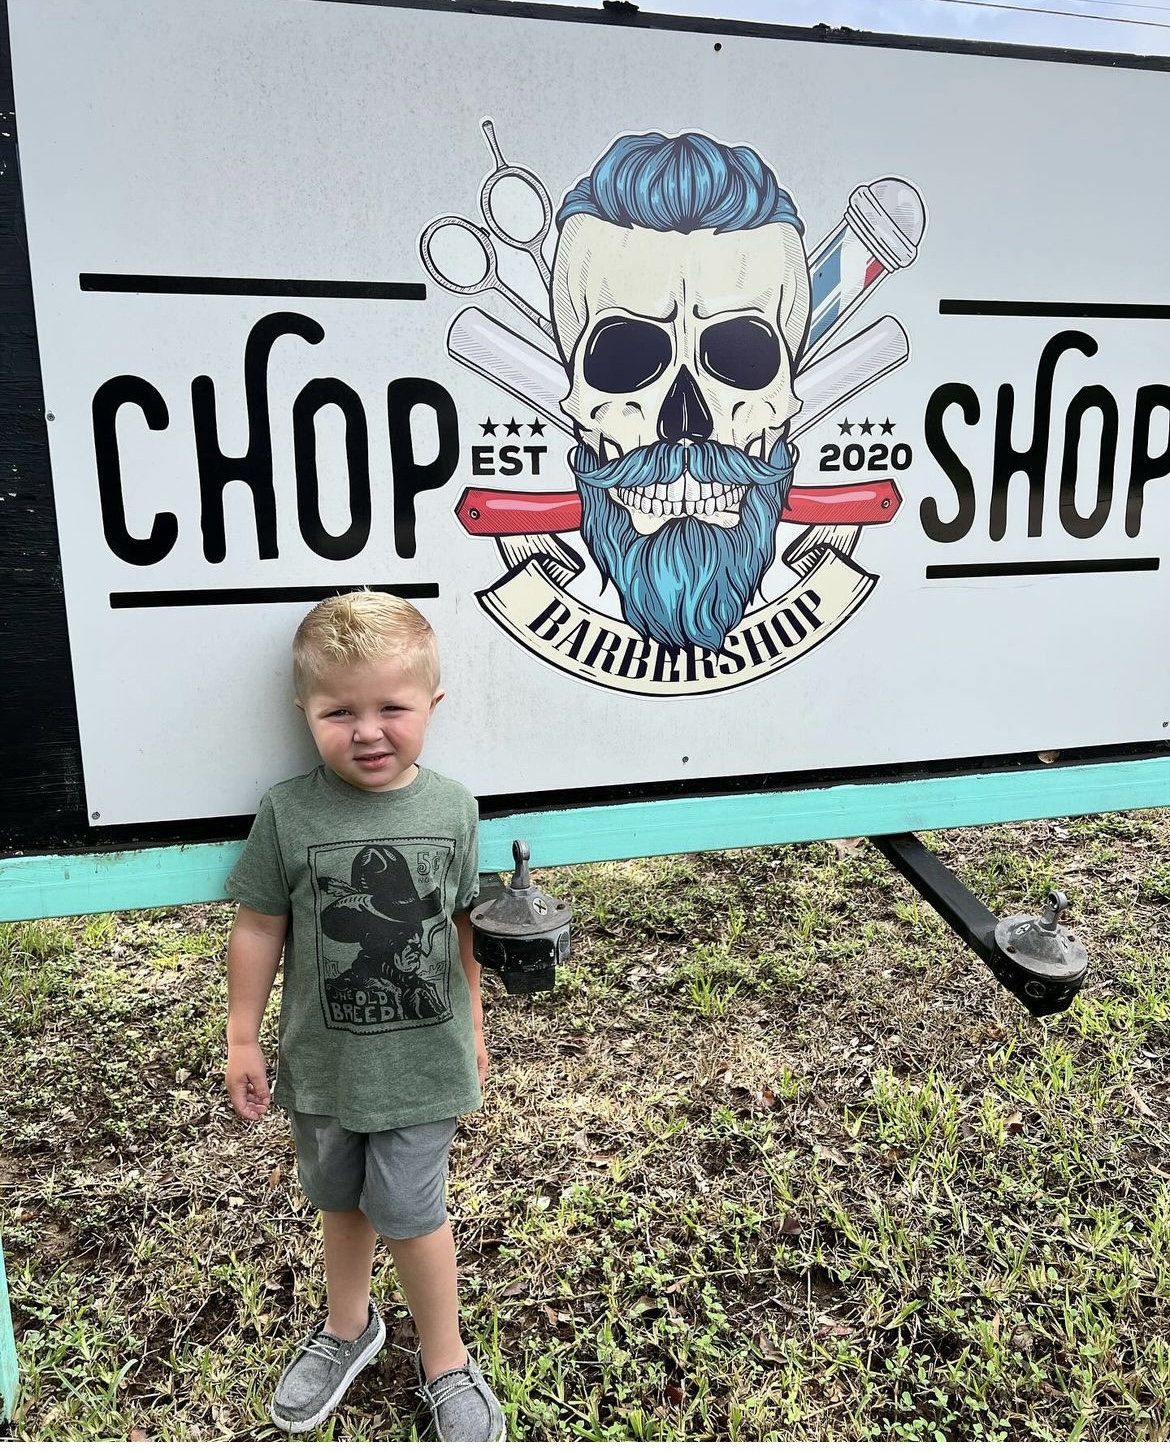 Chop Shop Barbershop 920 S Trade Days Blvd, Canton Texas 75103